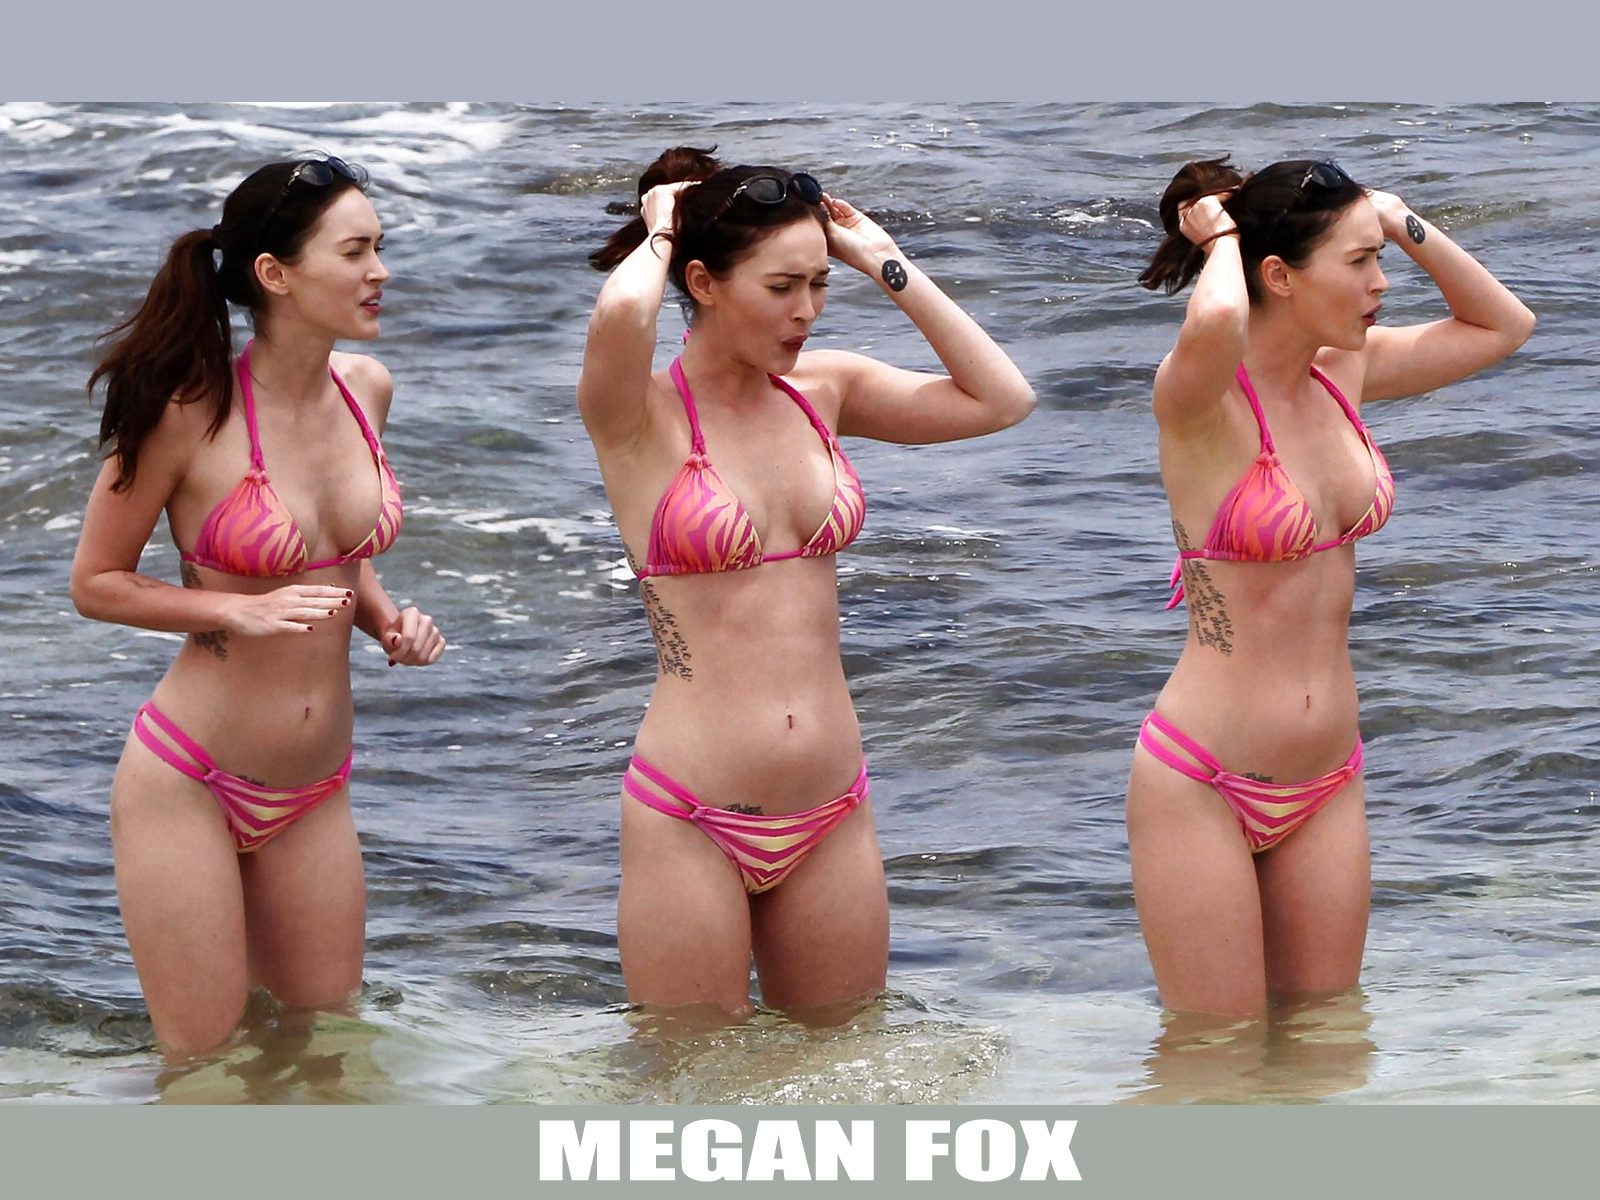 
Меган Фокс ( Megan Fox )
